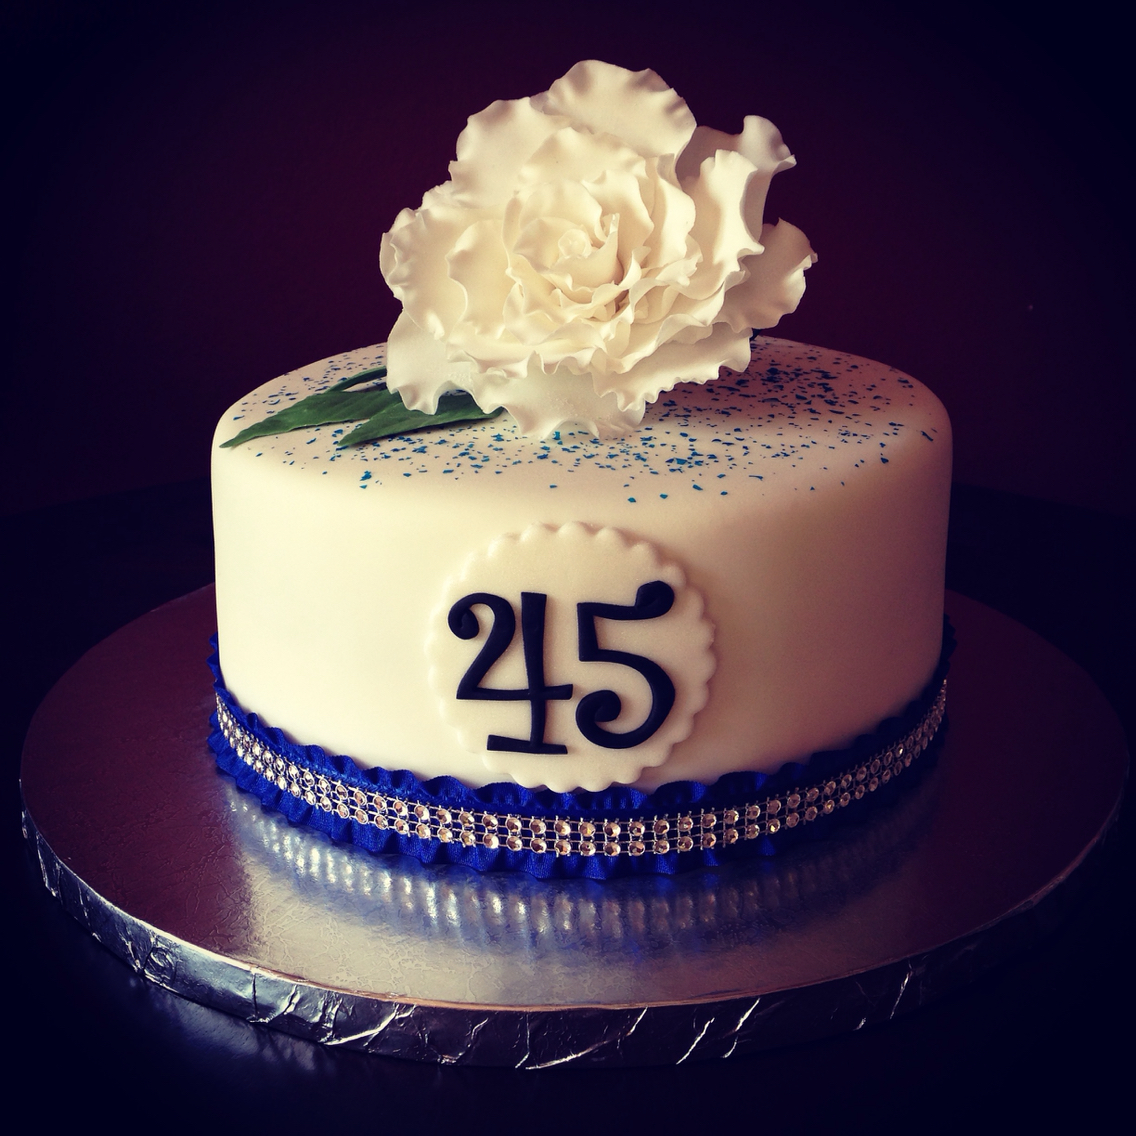 45th-wedding-anniversary-cake_517079.jpg